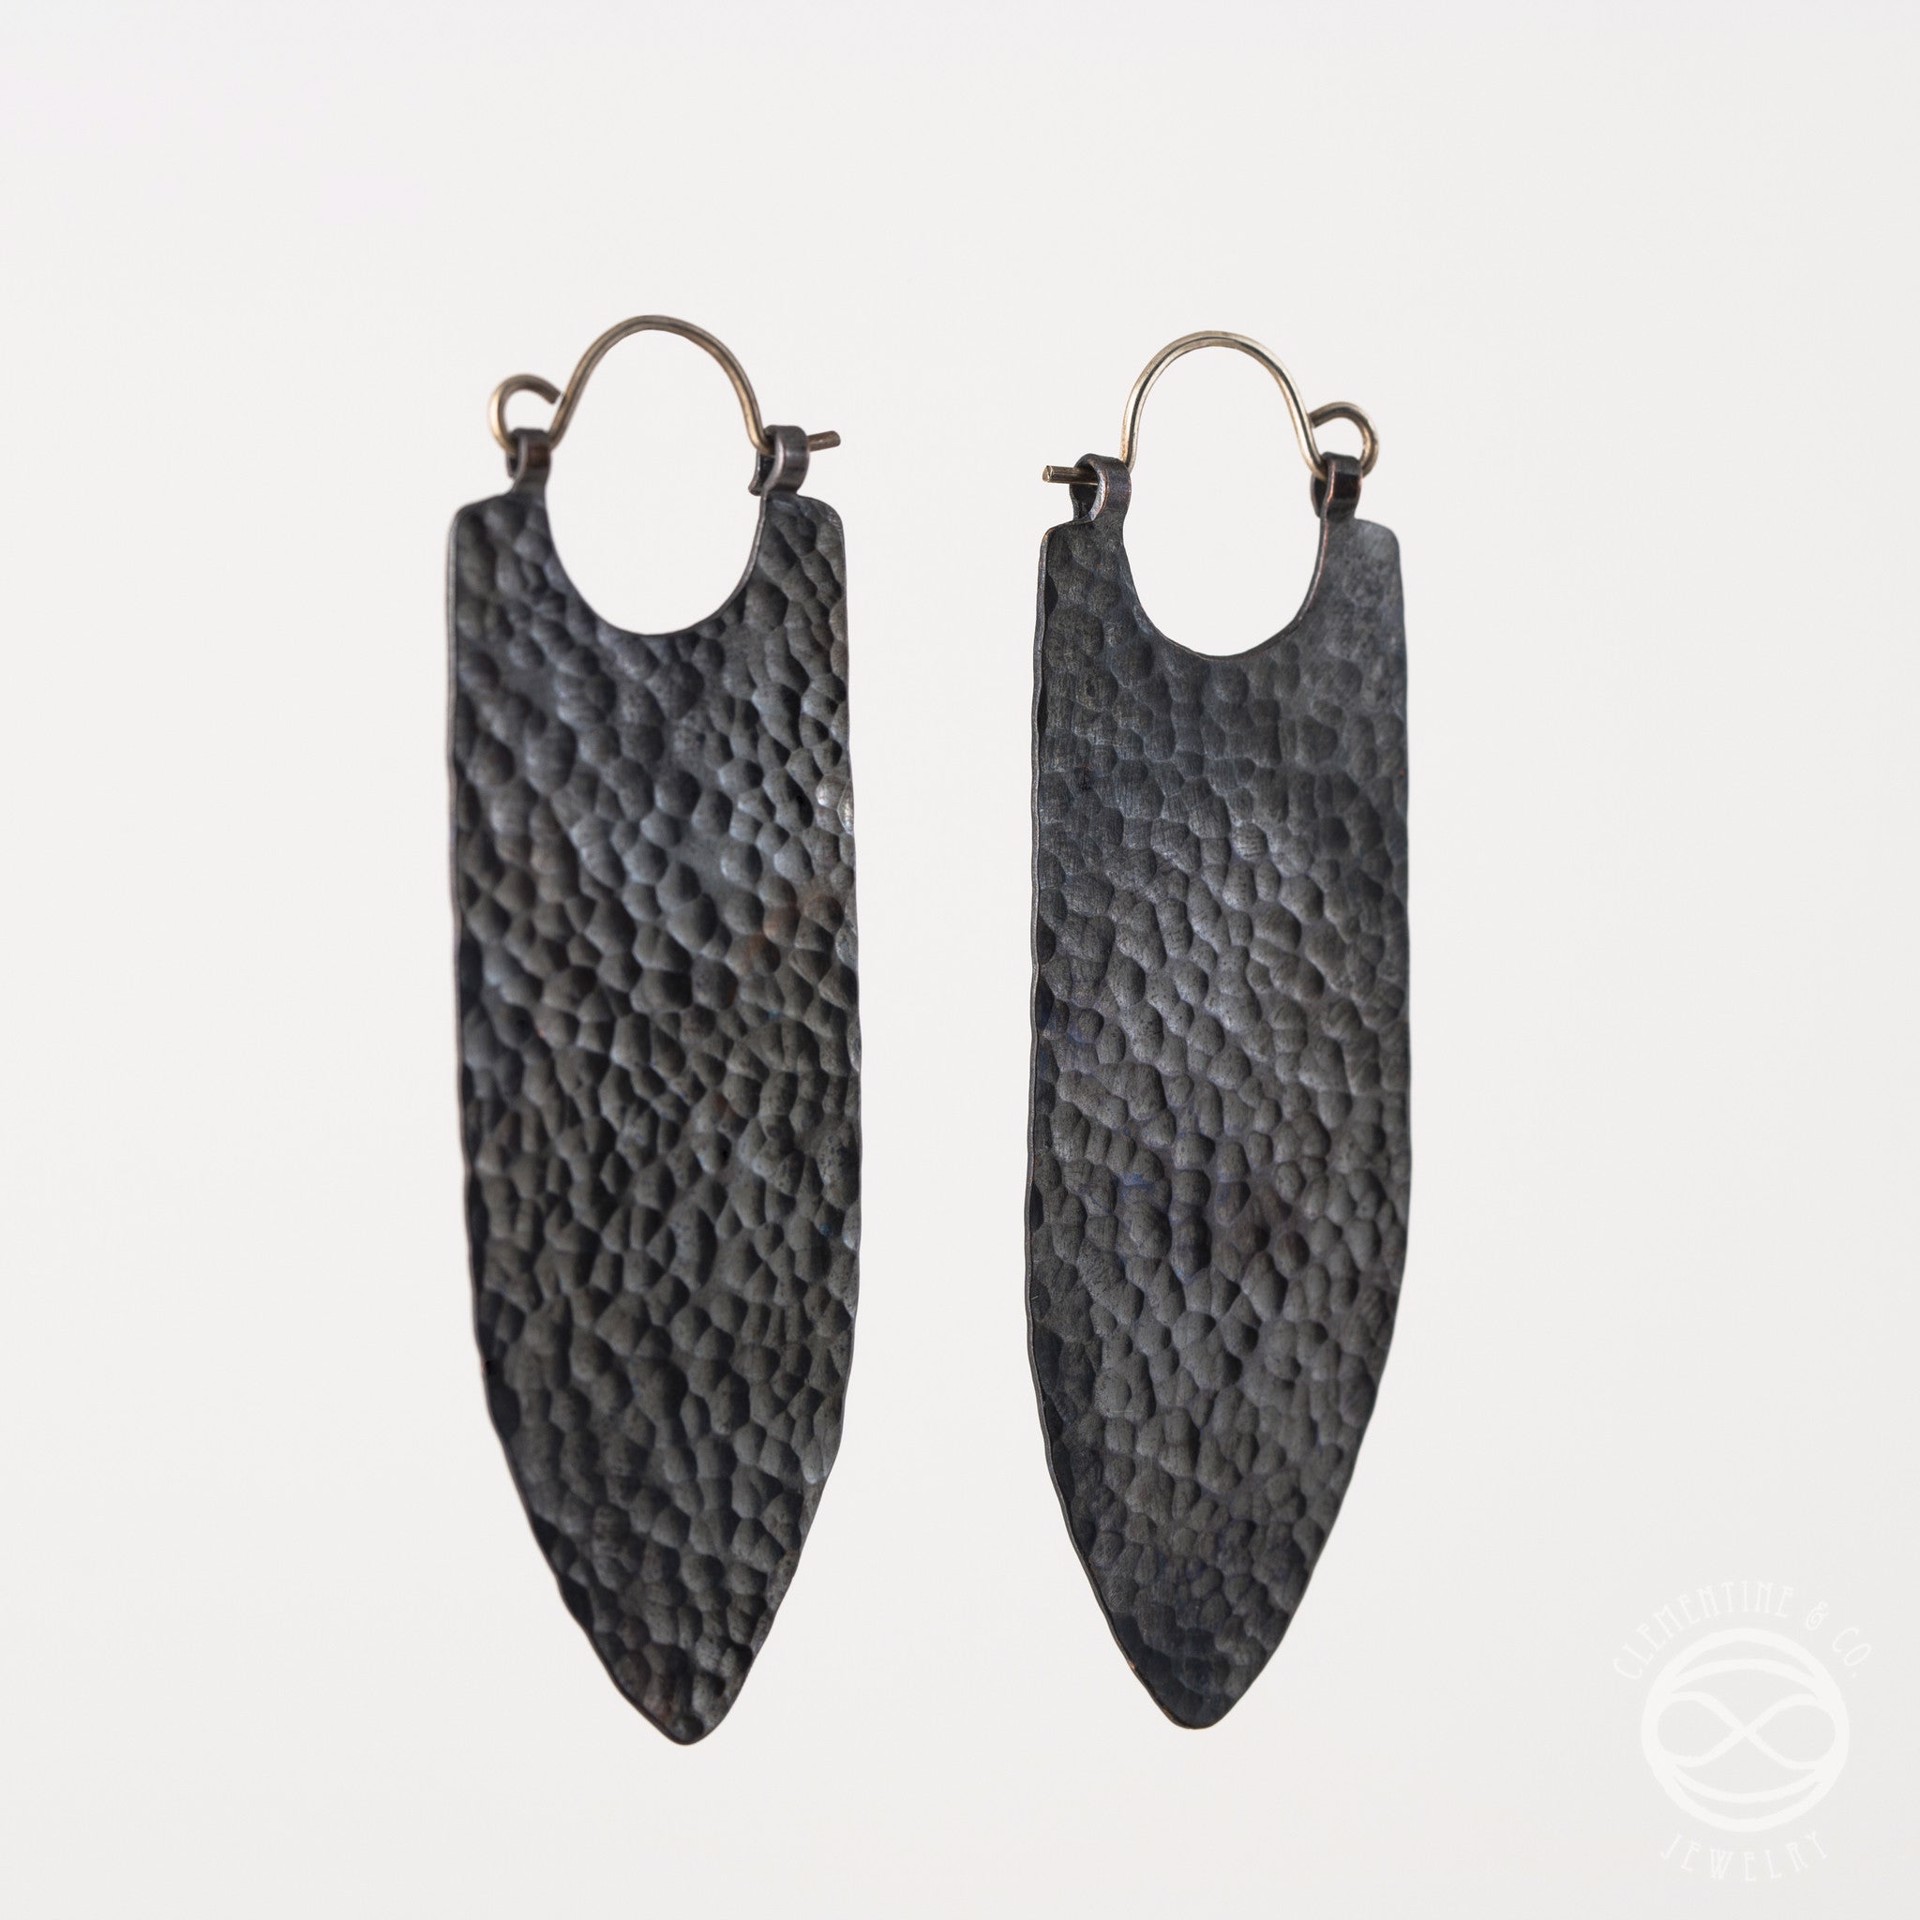 Banner Earrings in Blackened Copper by Clementine & Co. Jewelry